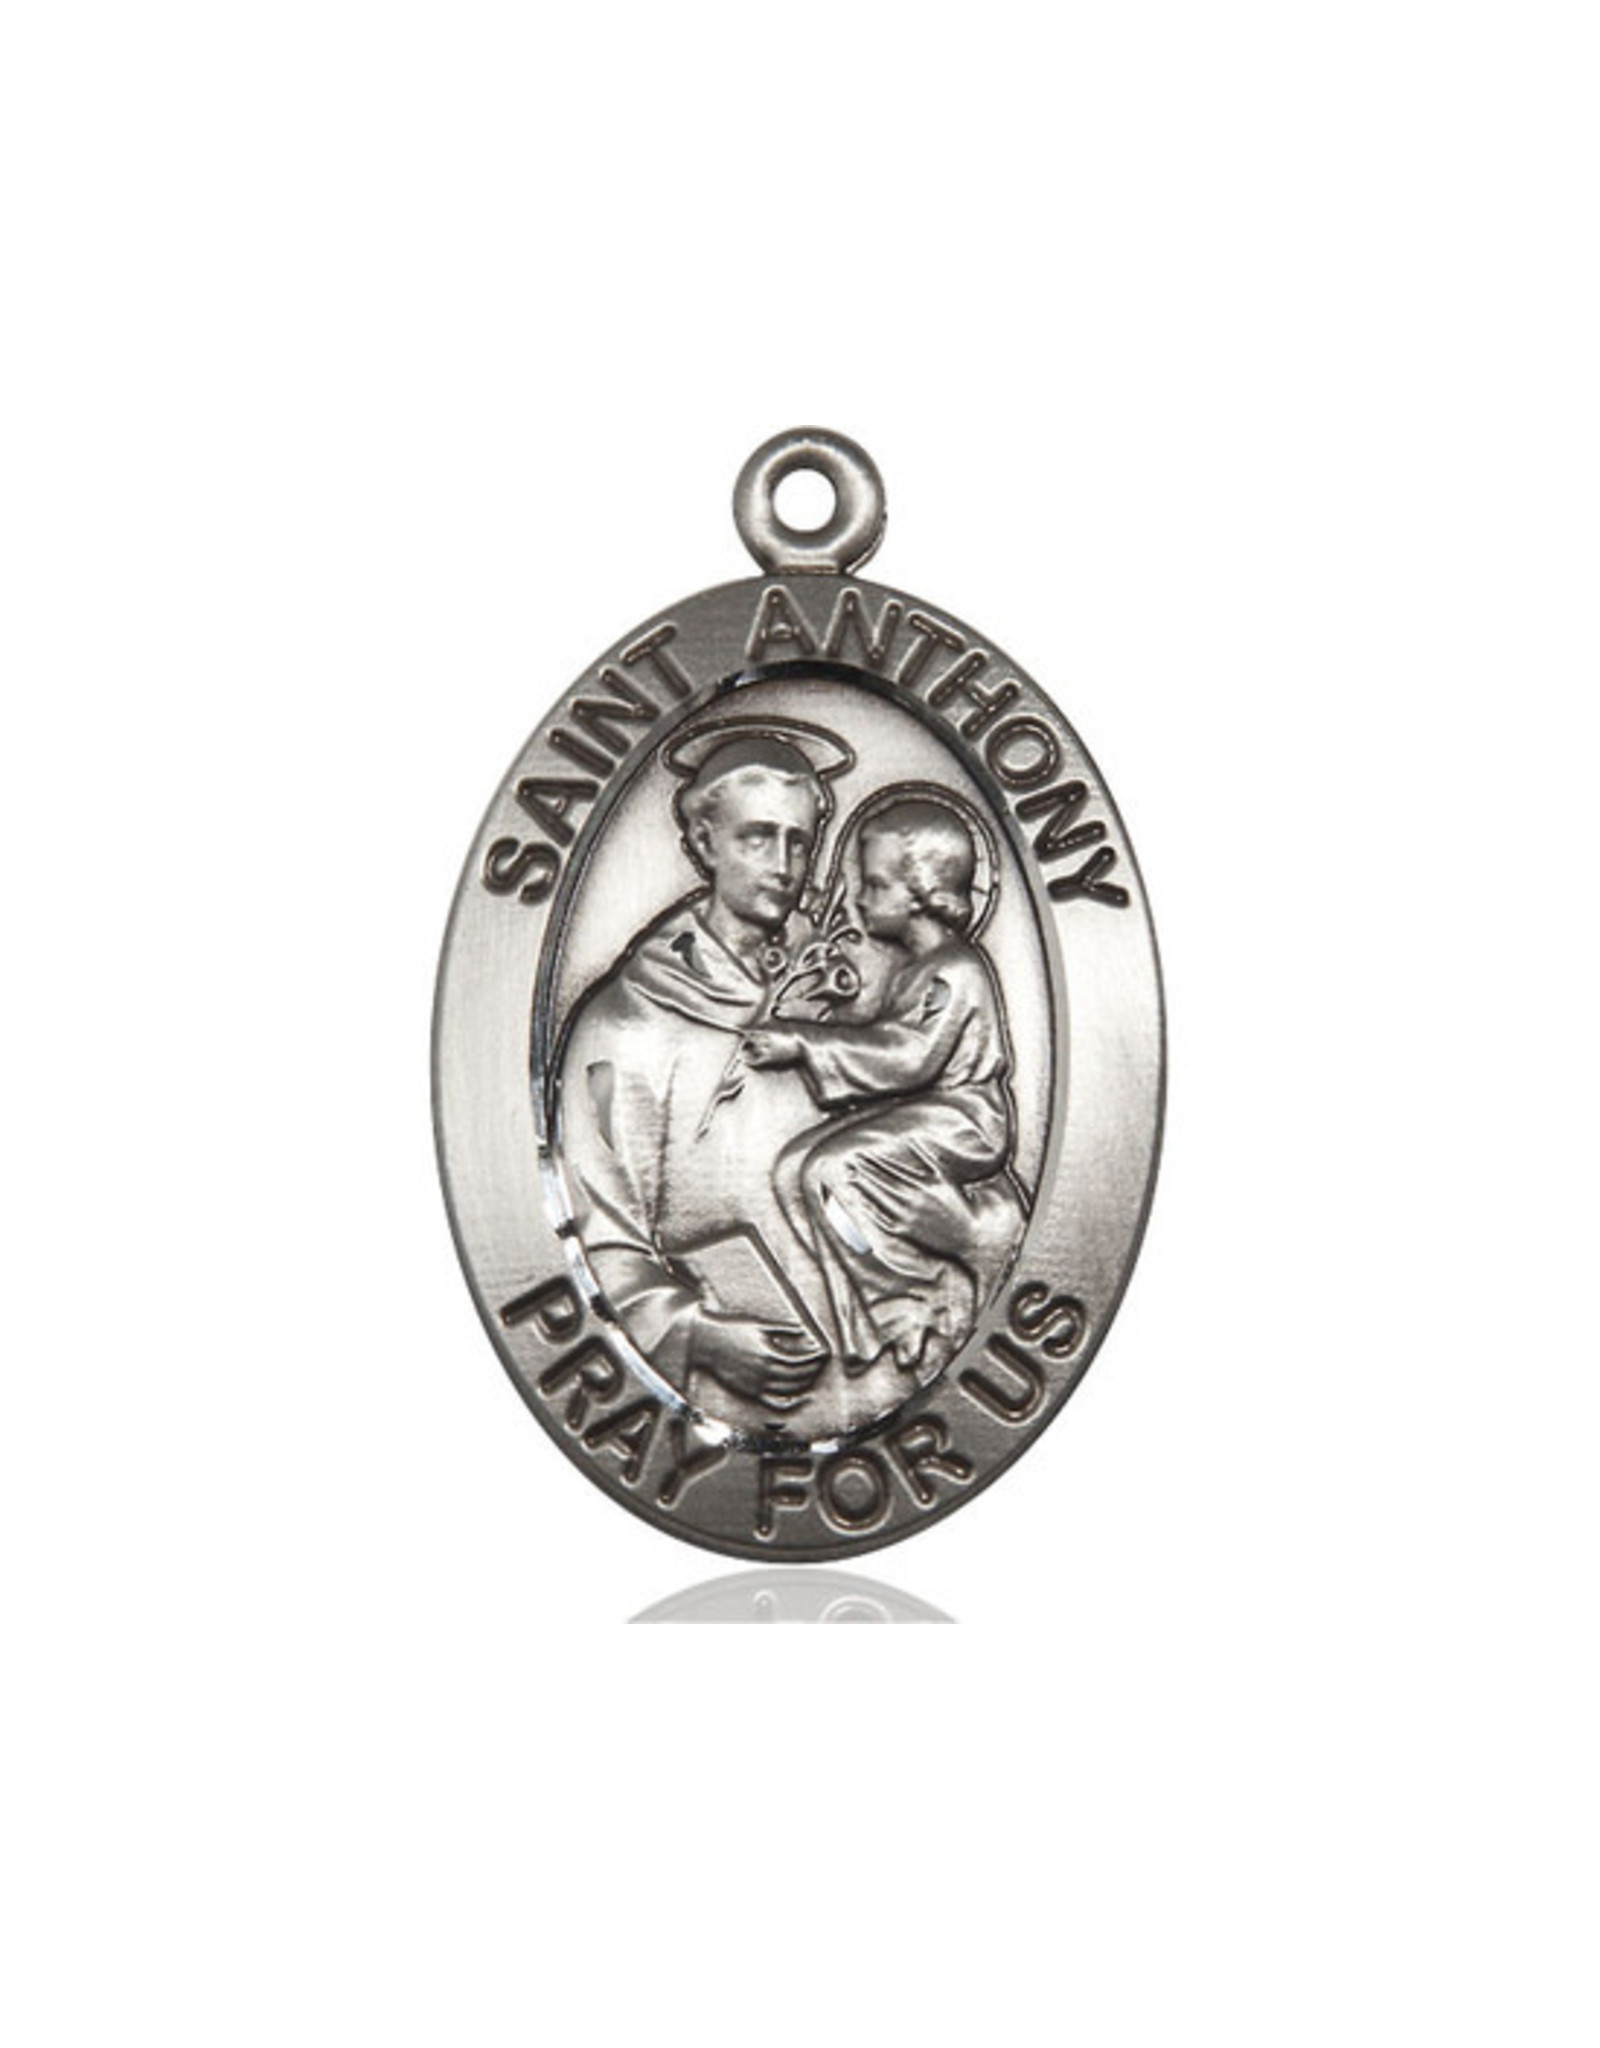 St. Anthony Medal, Large, Sterling Silver